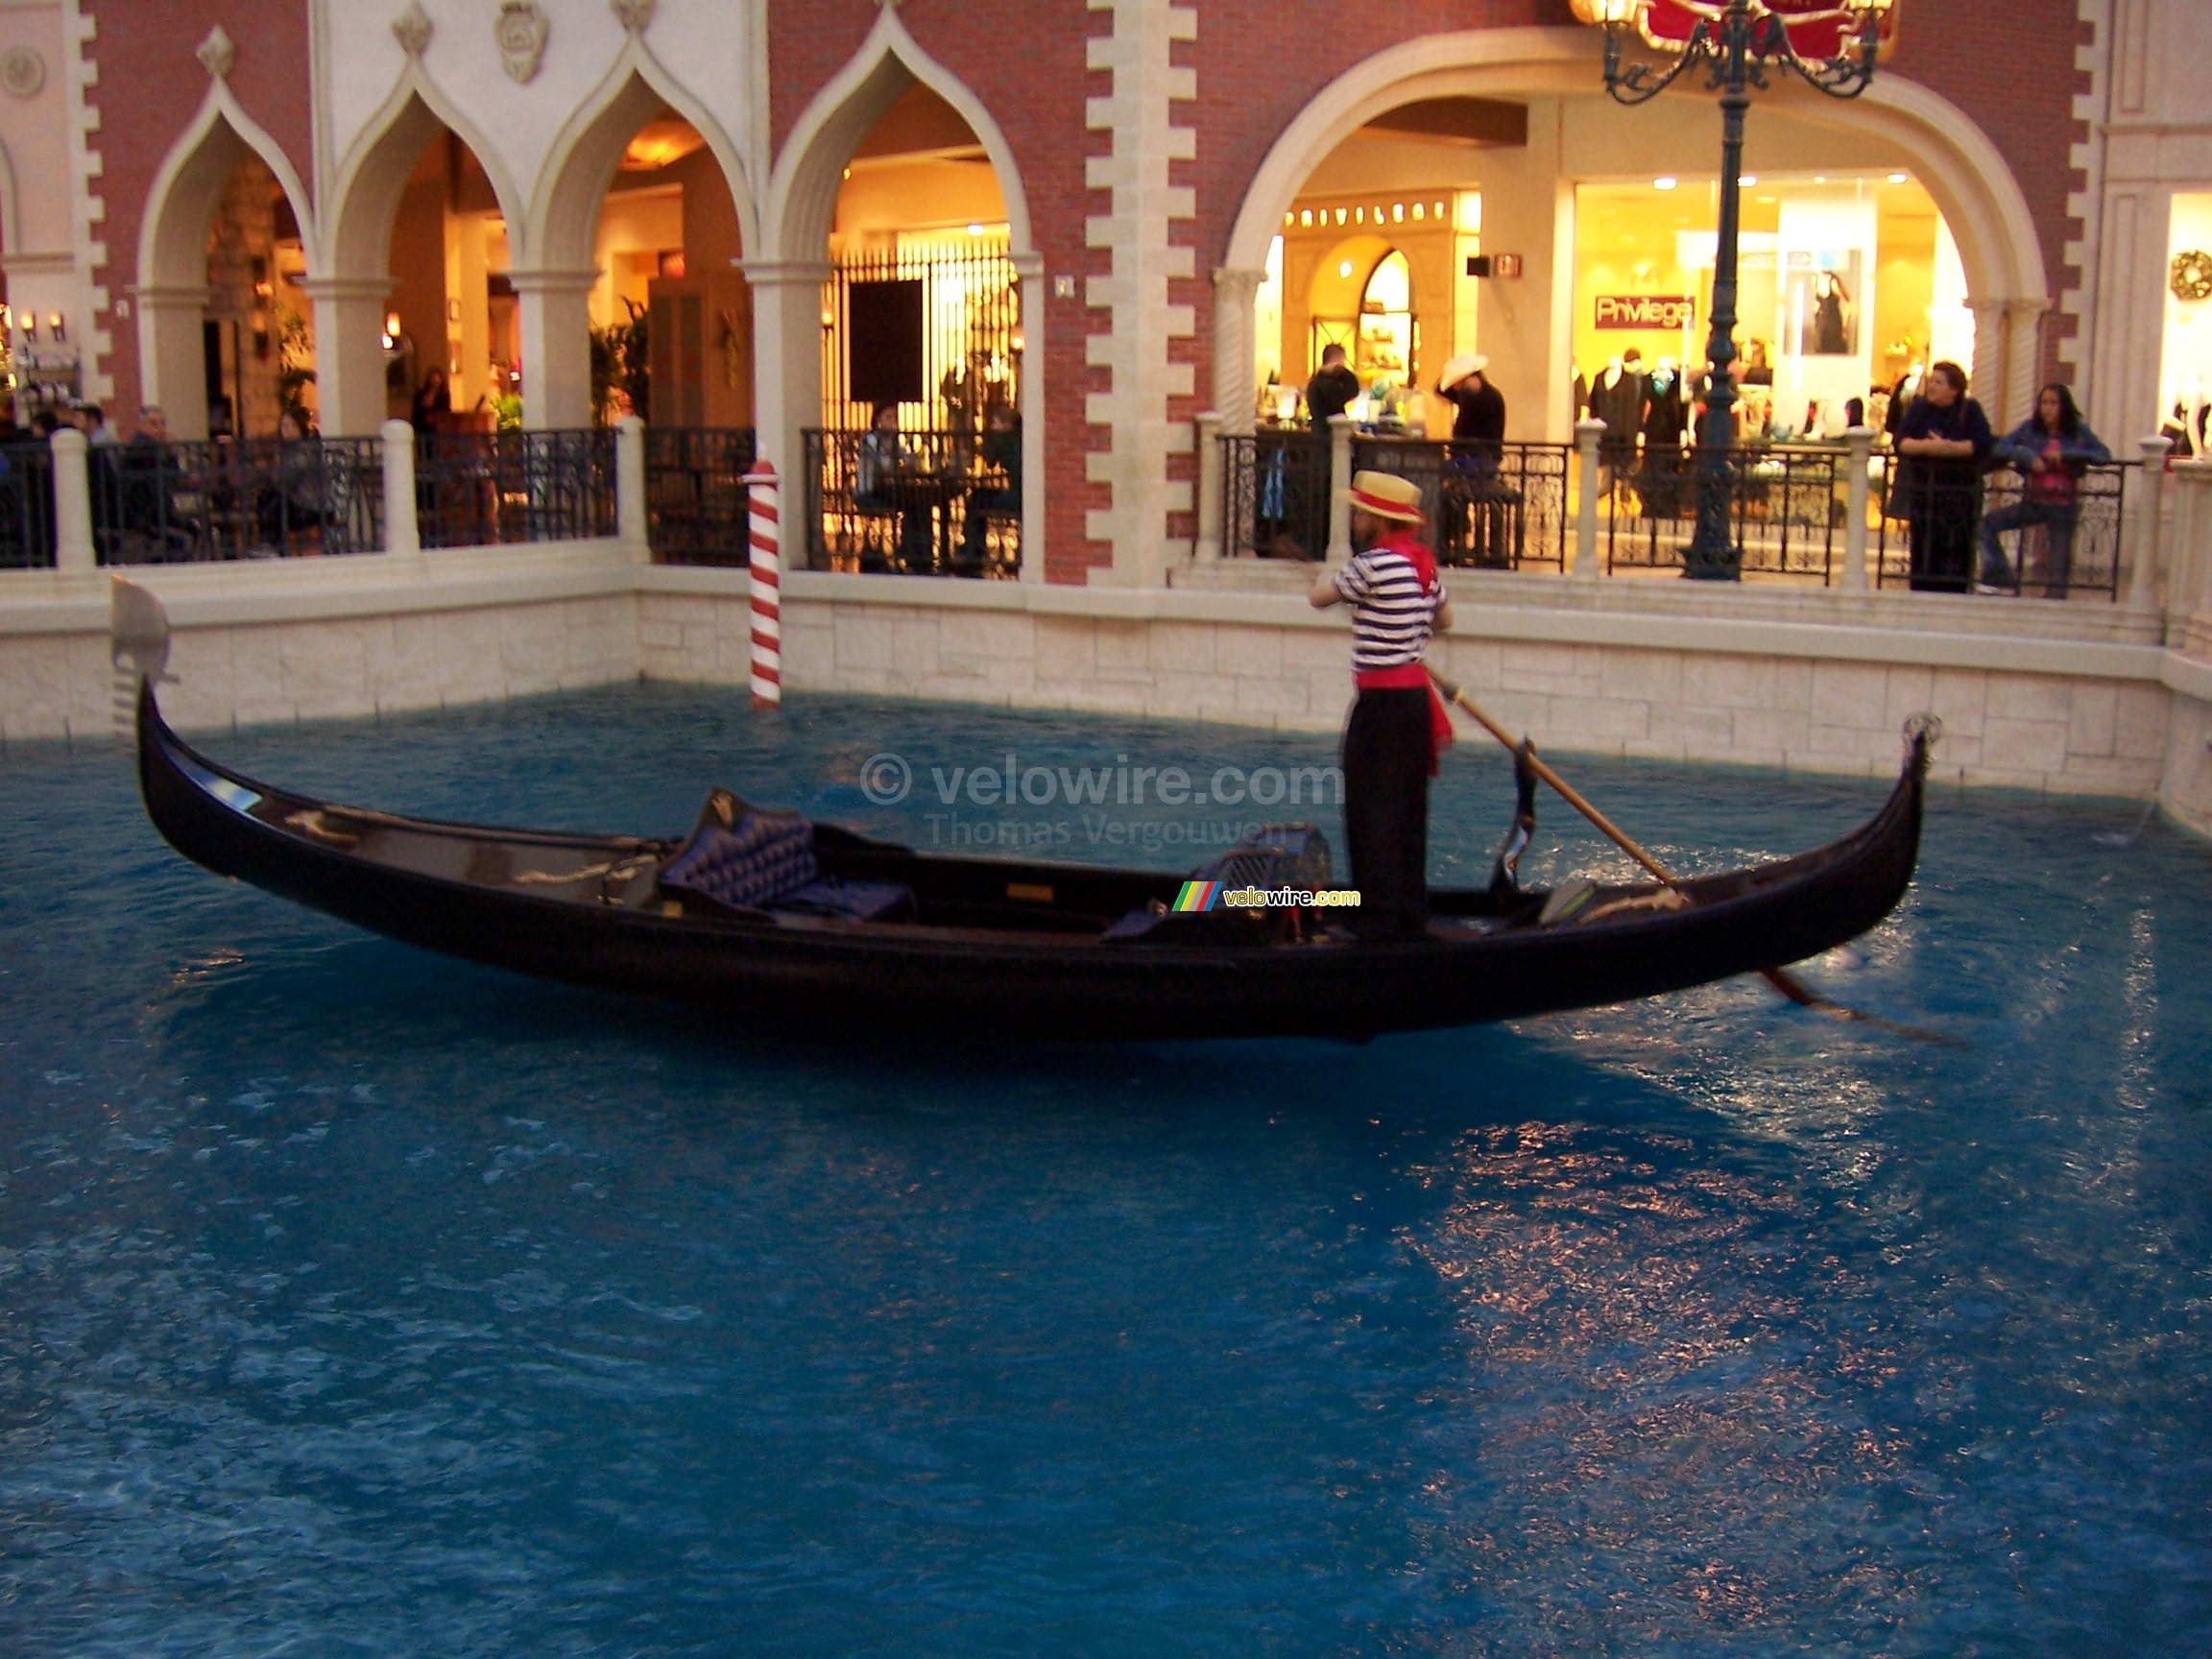 A gondola in the Venetian hotel (2)